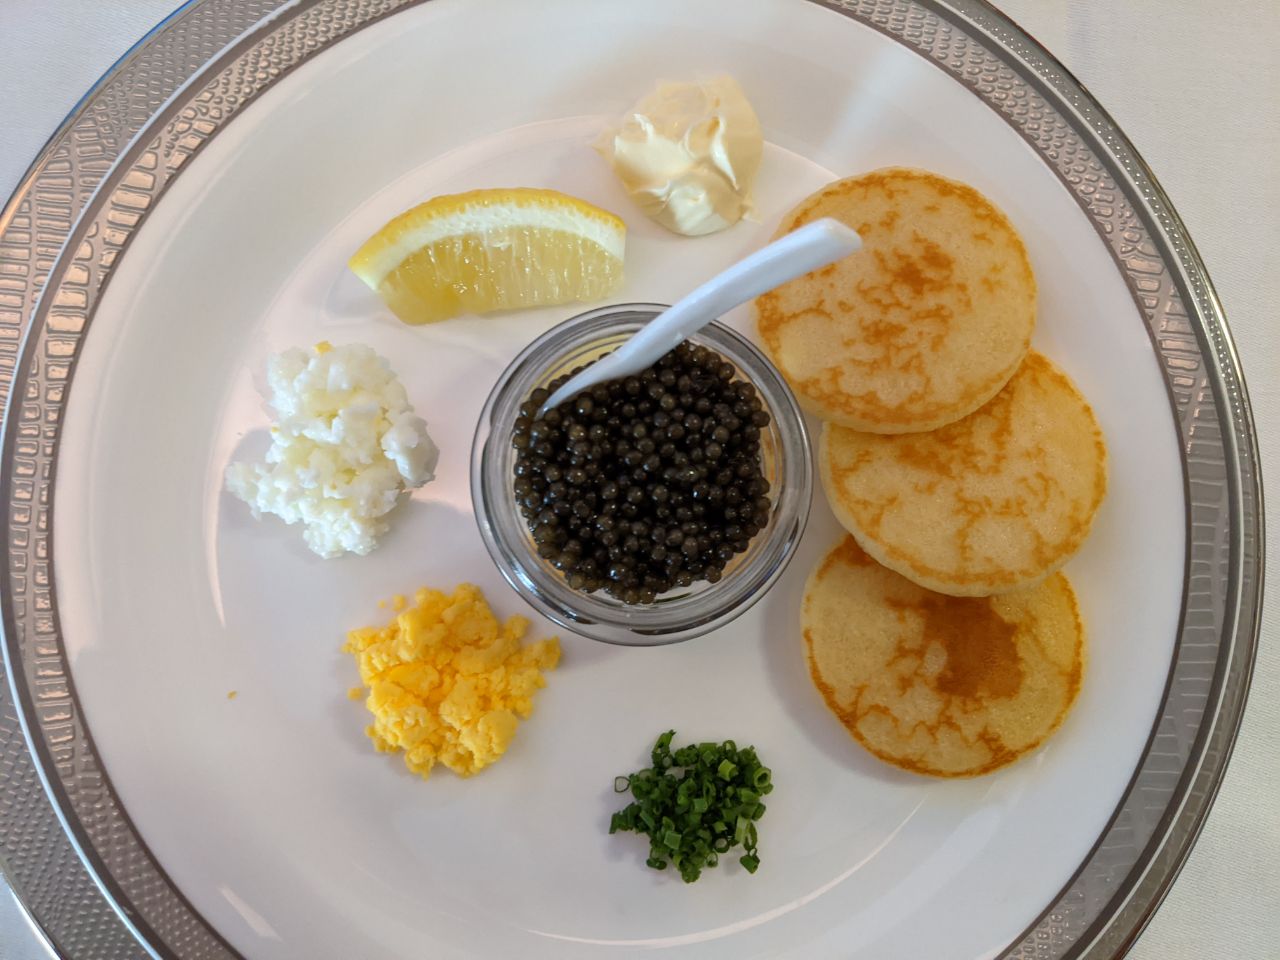 Caviar and accompaniments 